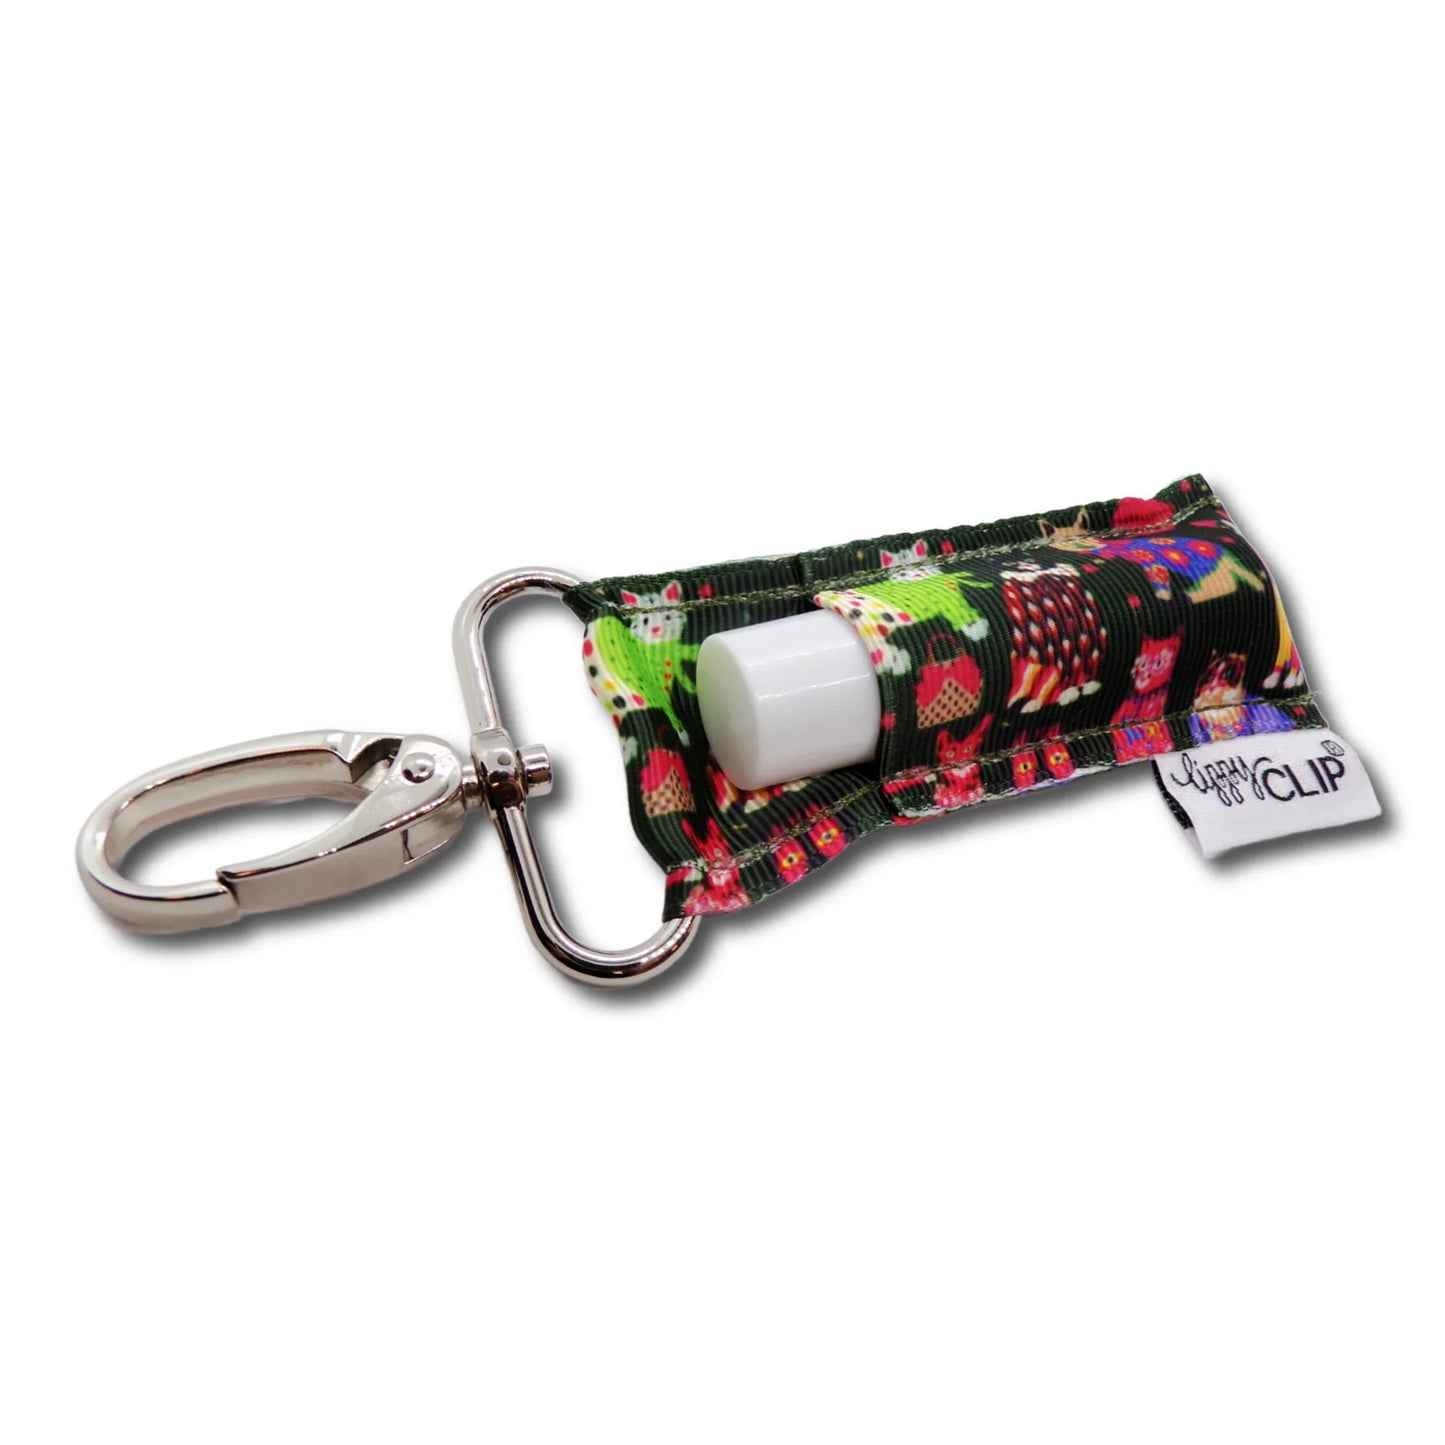 Lippy Clips - Keychain Lip Balm Holders